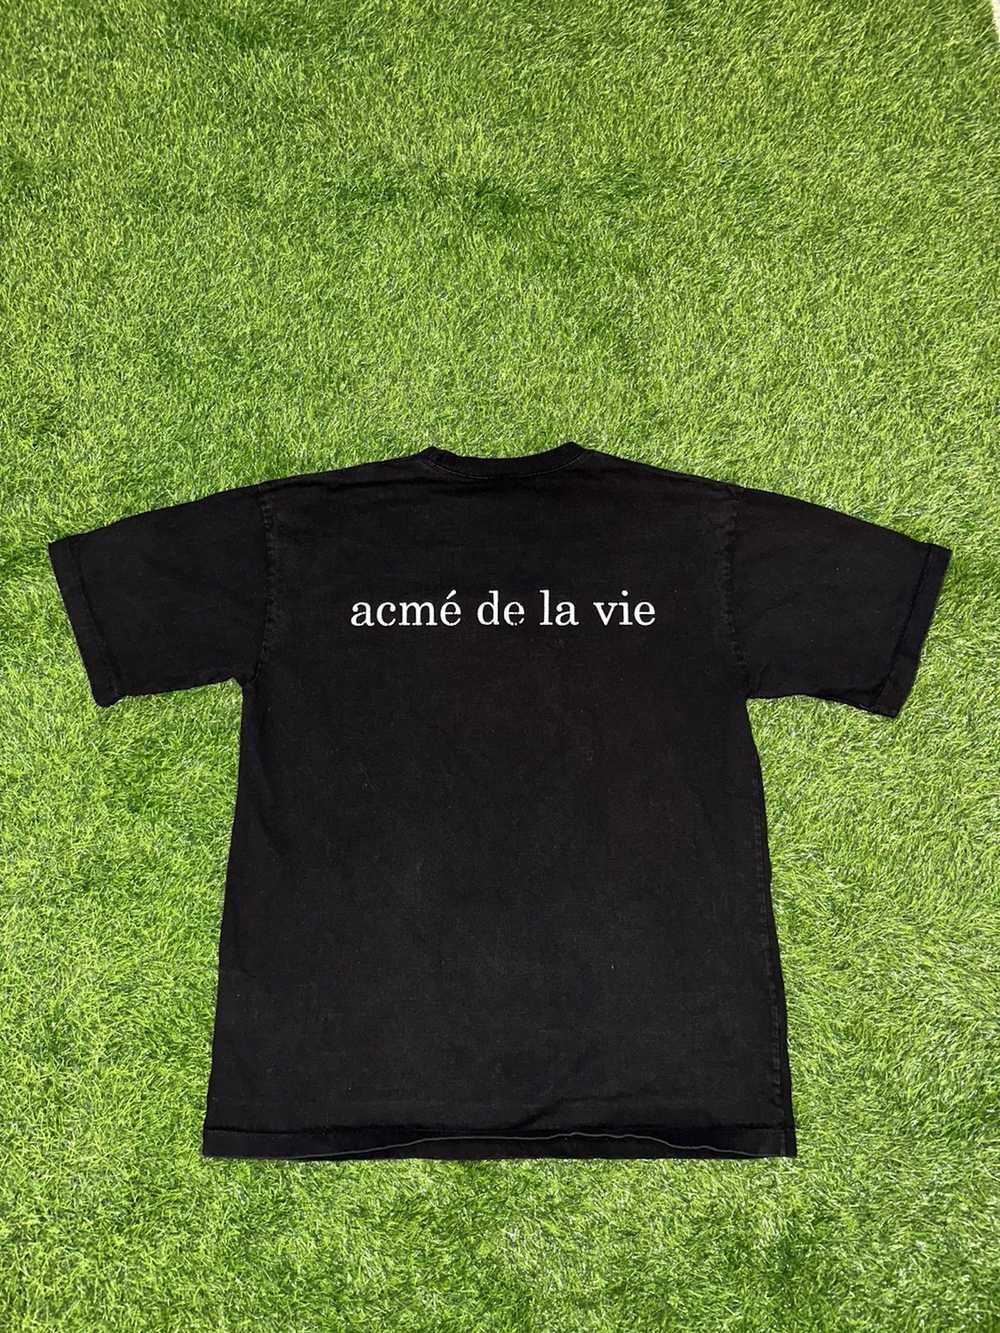 Streetwear Acme de la vie tee shirt size large - image 2